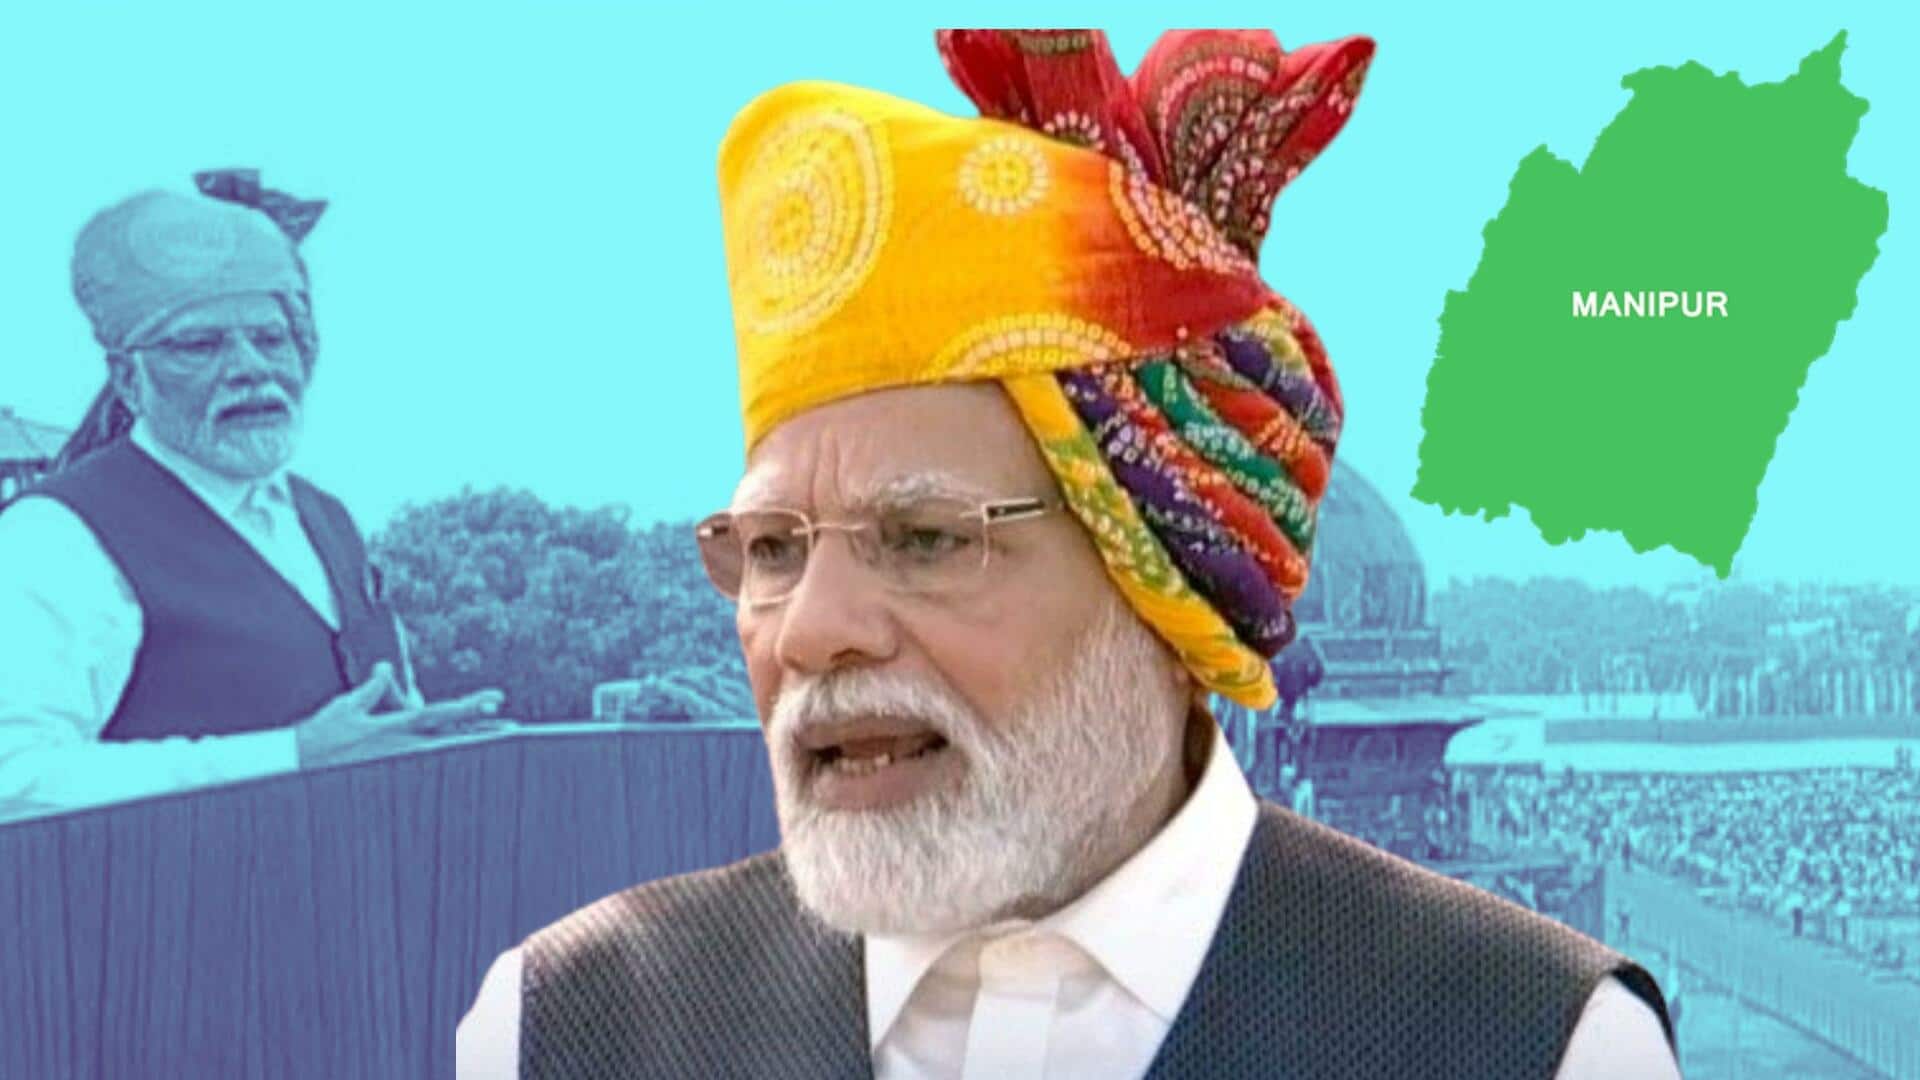 PM Modi: దేశం మొత్తం మణిపూర్ వెంటే ఉంది: స్వాతంత్య్ర వేడుకల్లో ప్రధాని మోదీ